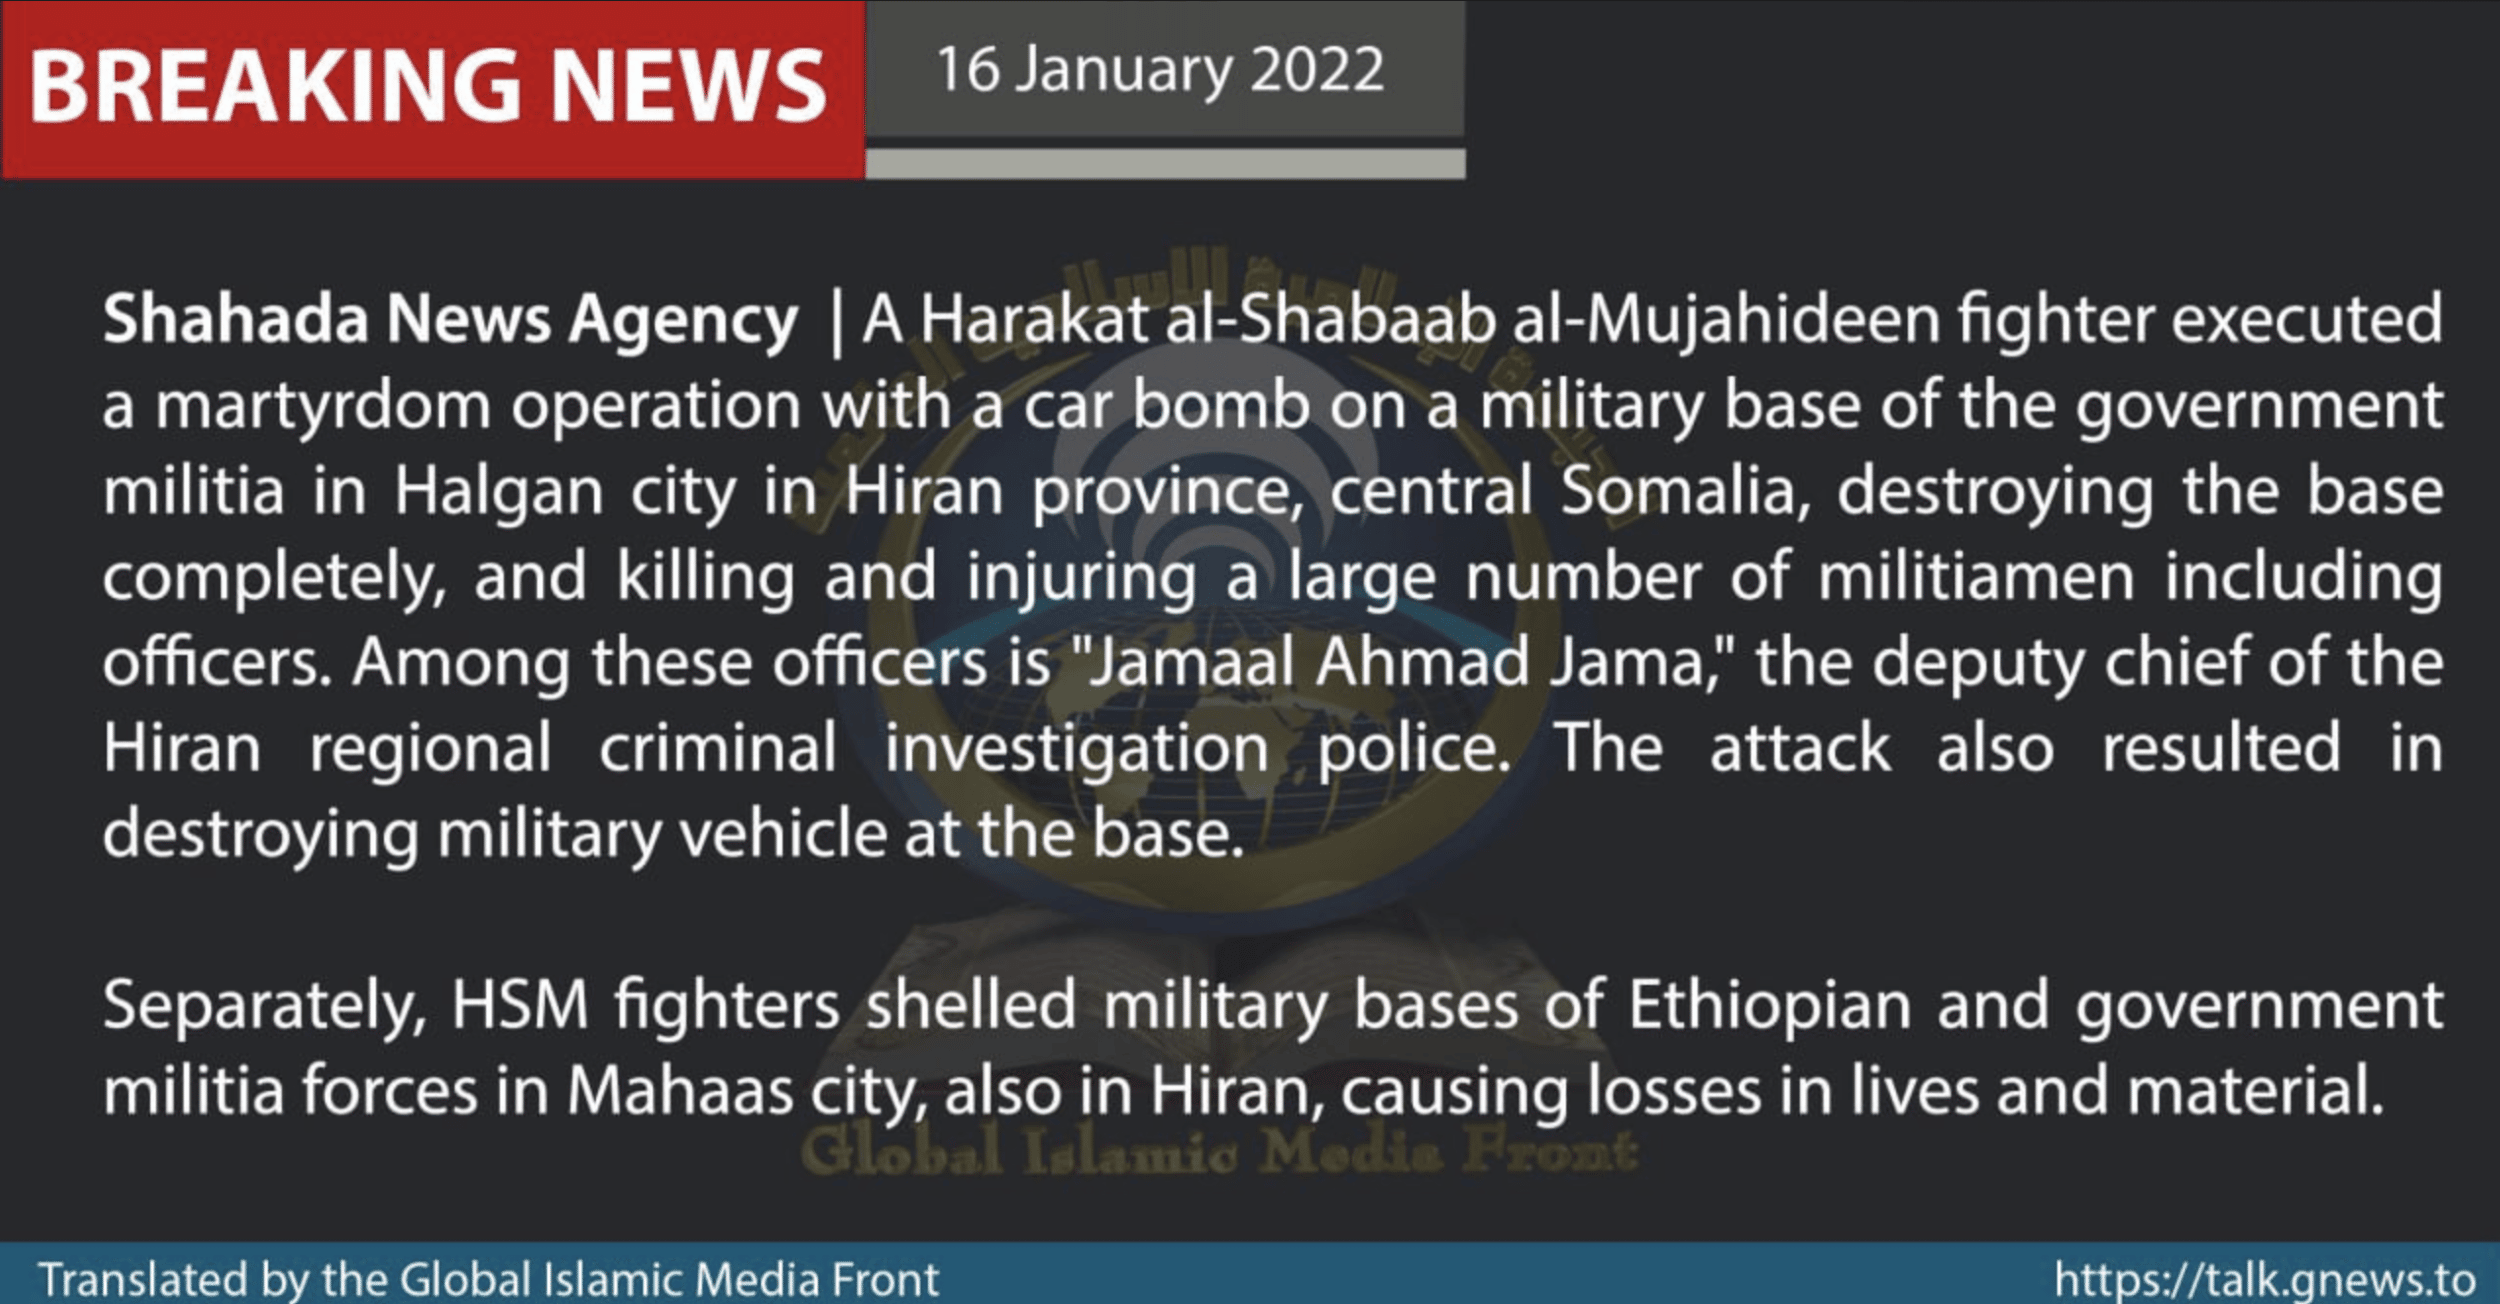 al-Shabaab Suicide Bombing Kills Deputy Chief of Regional Criminal Investigation Police in Halgan, Hiran Province, Somalia